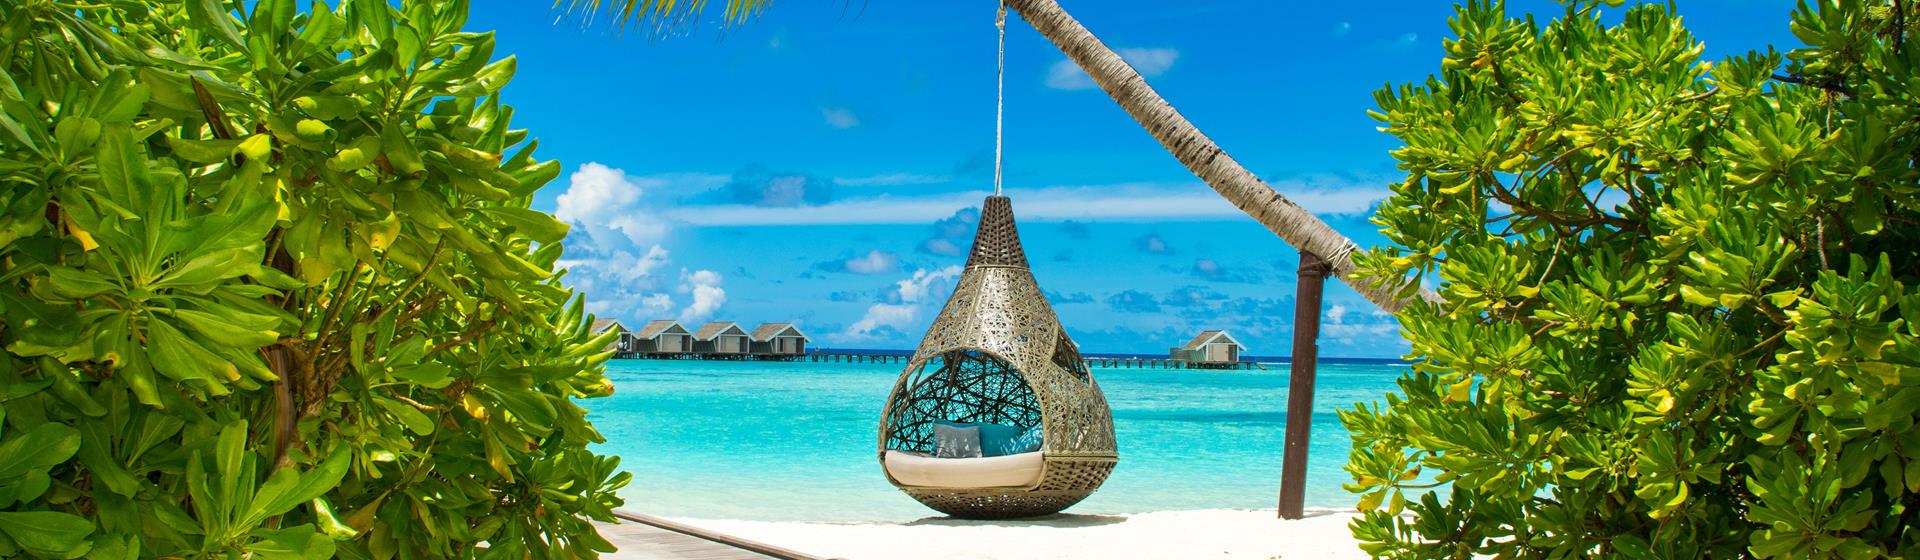 Holidays to the Maldives